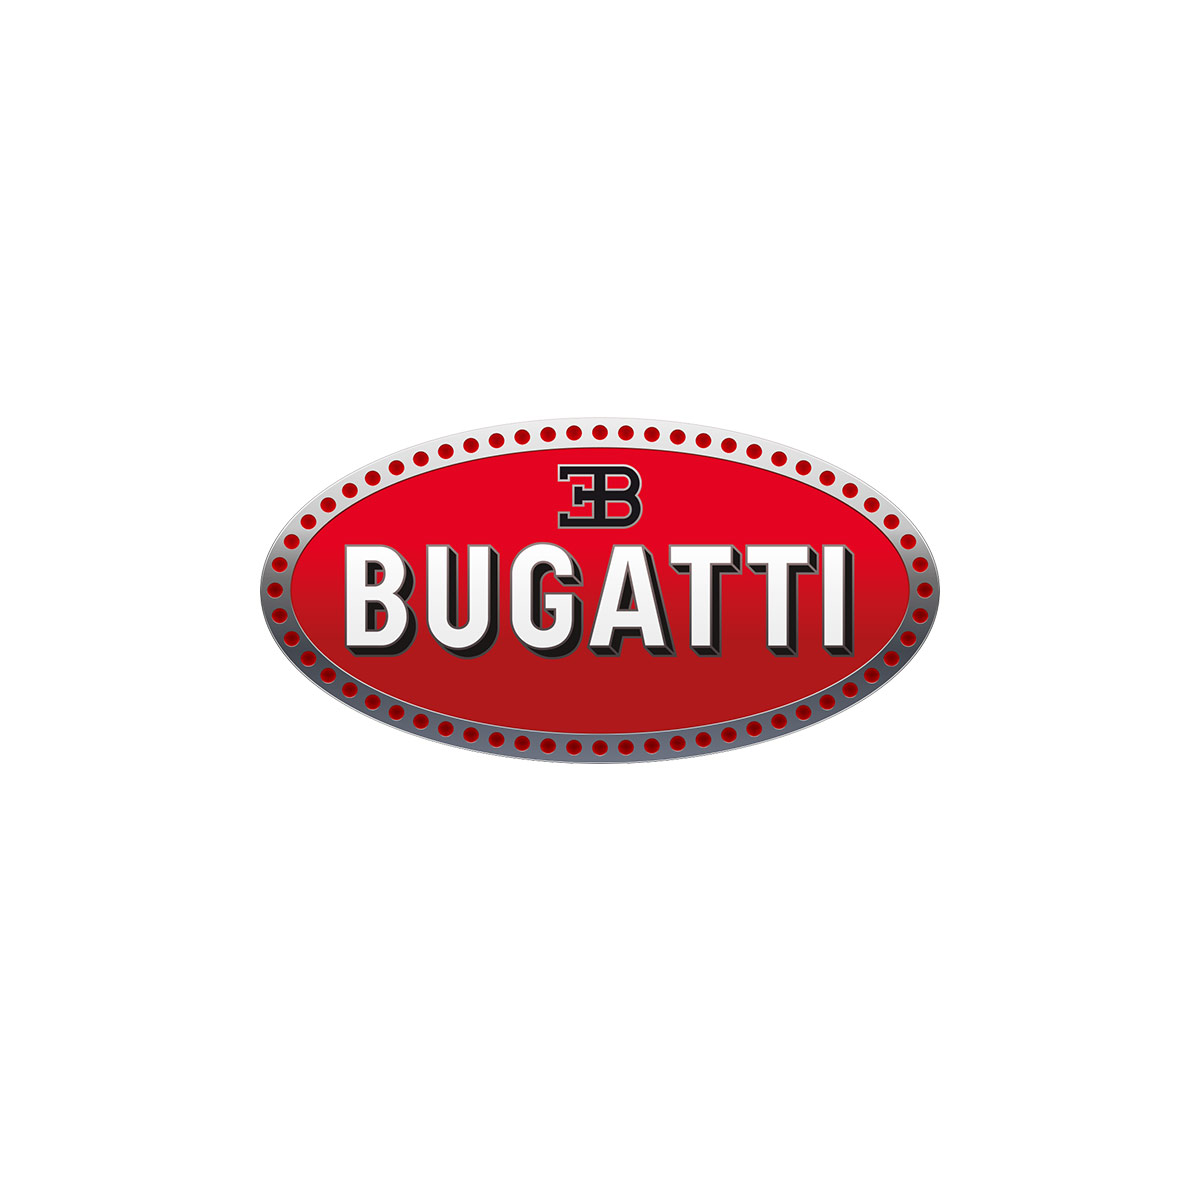 Bugatti Logo Vector